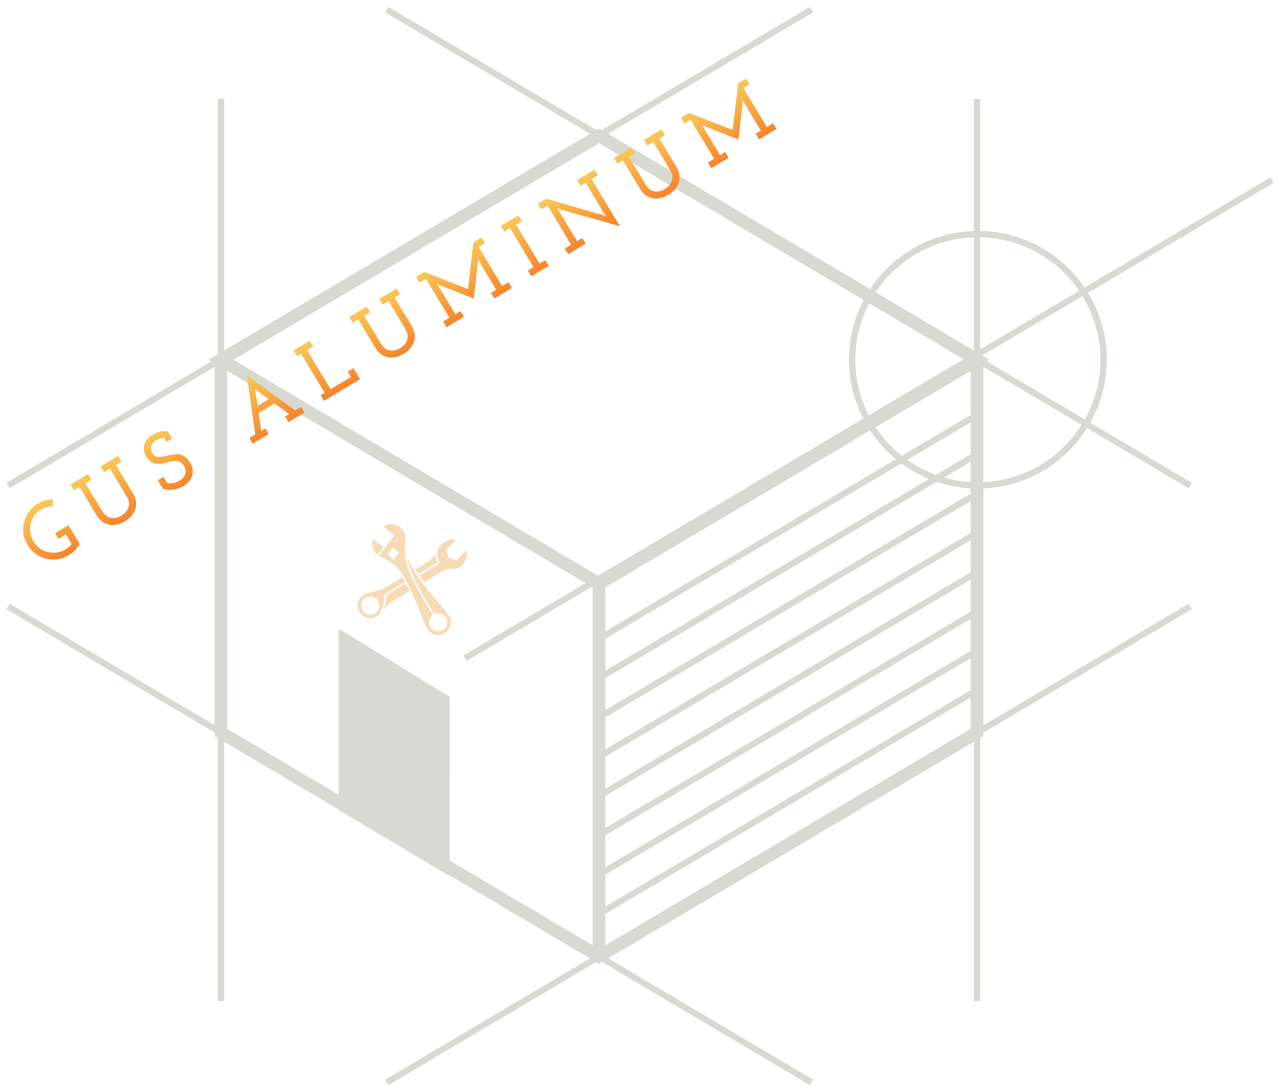 GUS ALUMINUM's logo